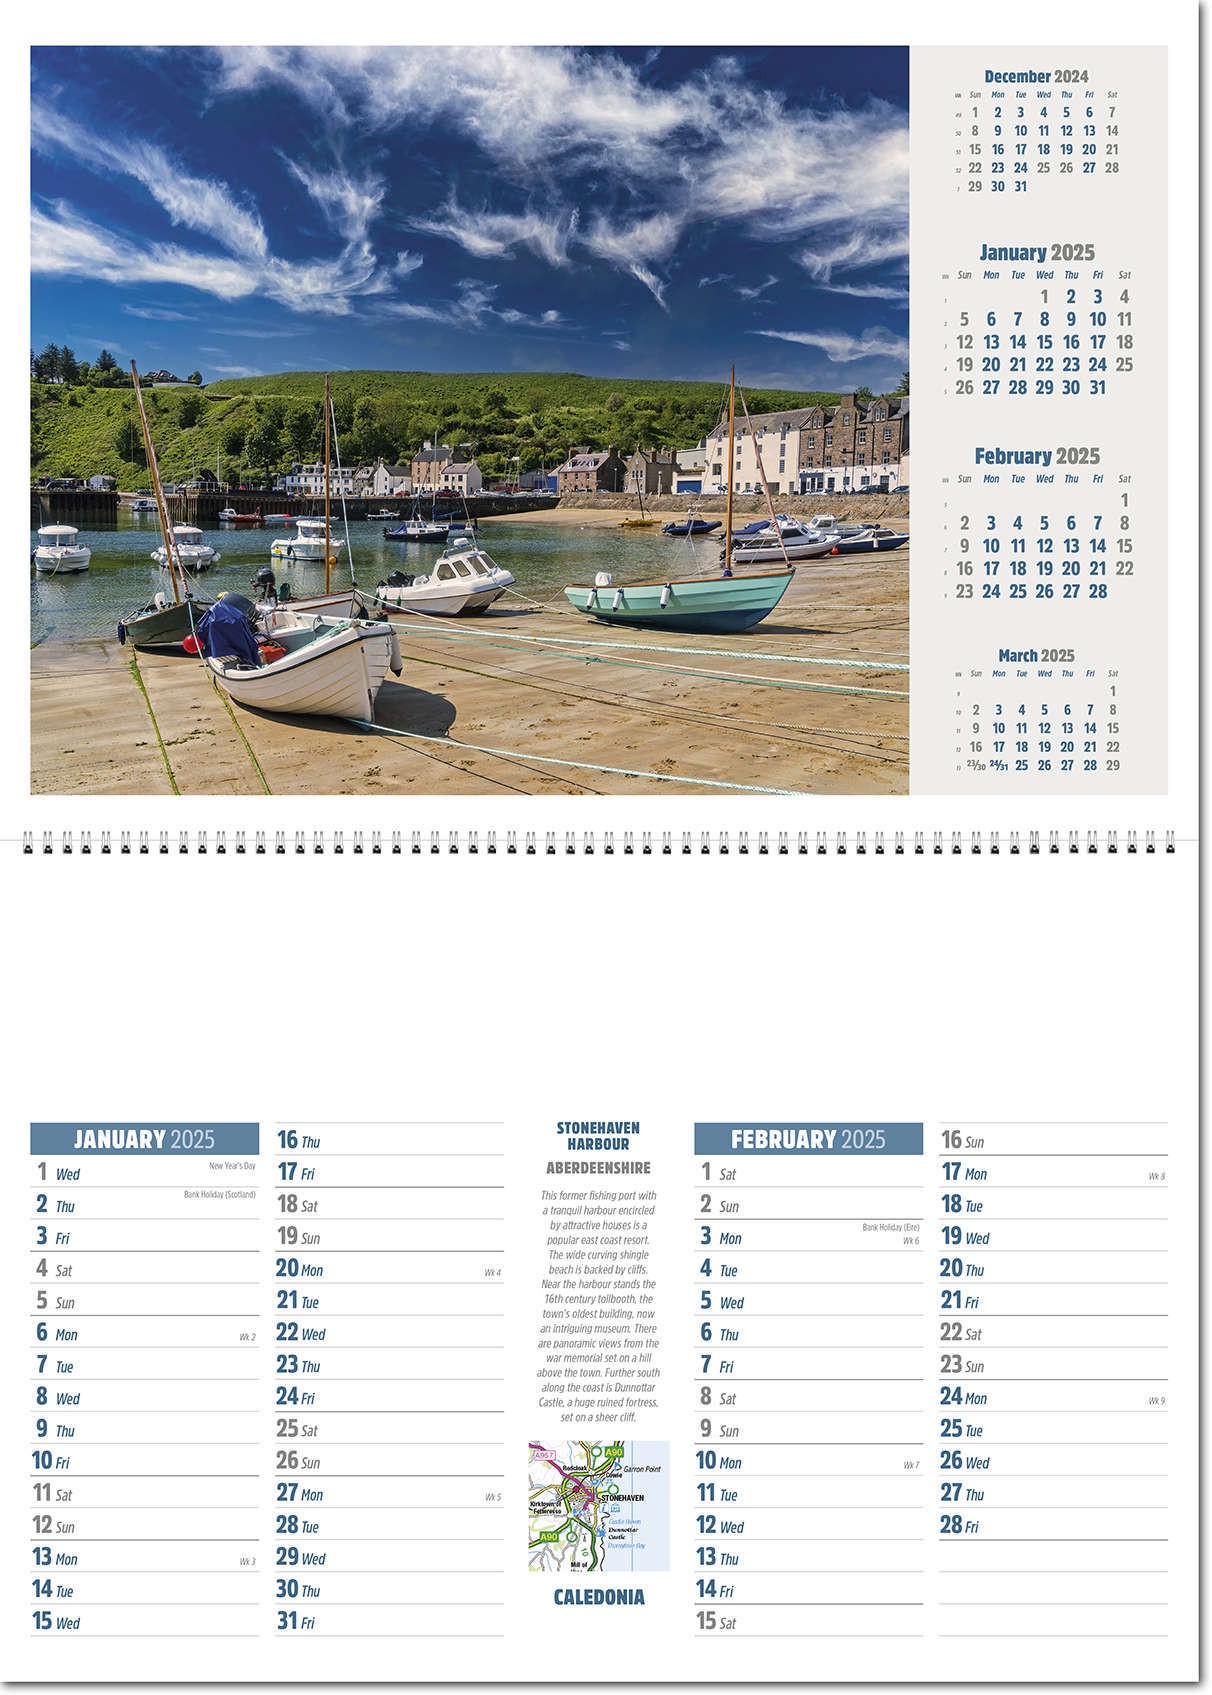 Caledonia Postage Saver Calendar